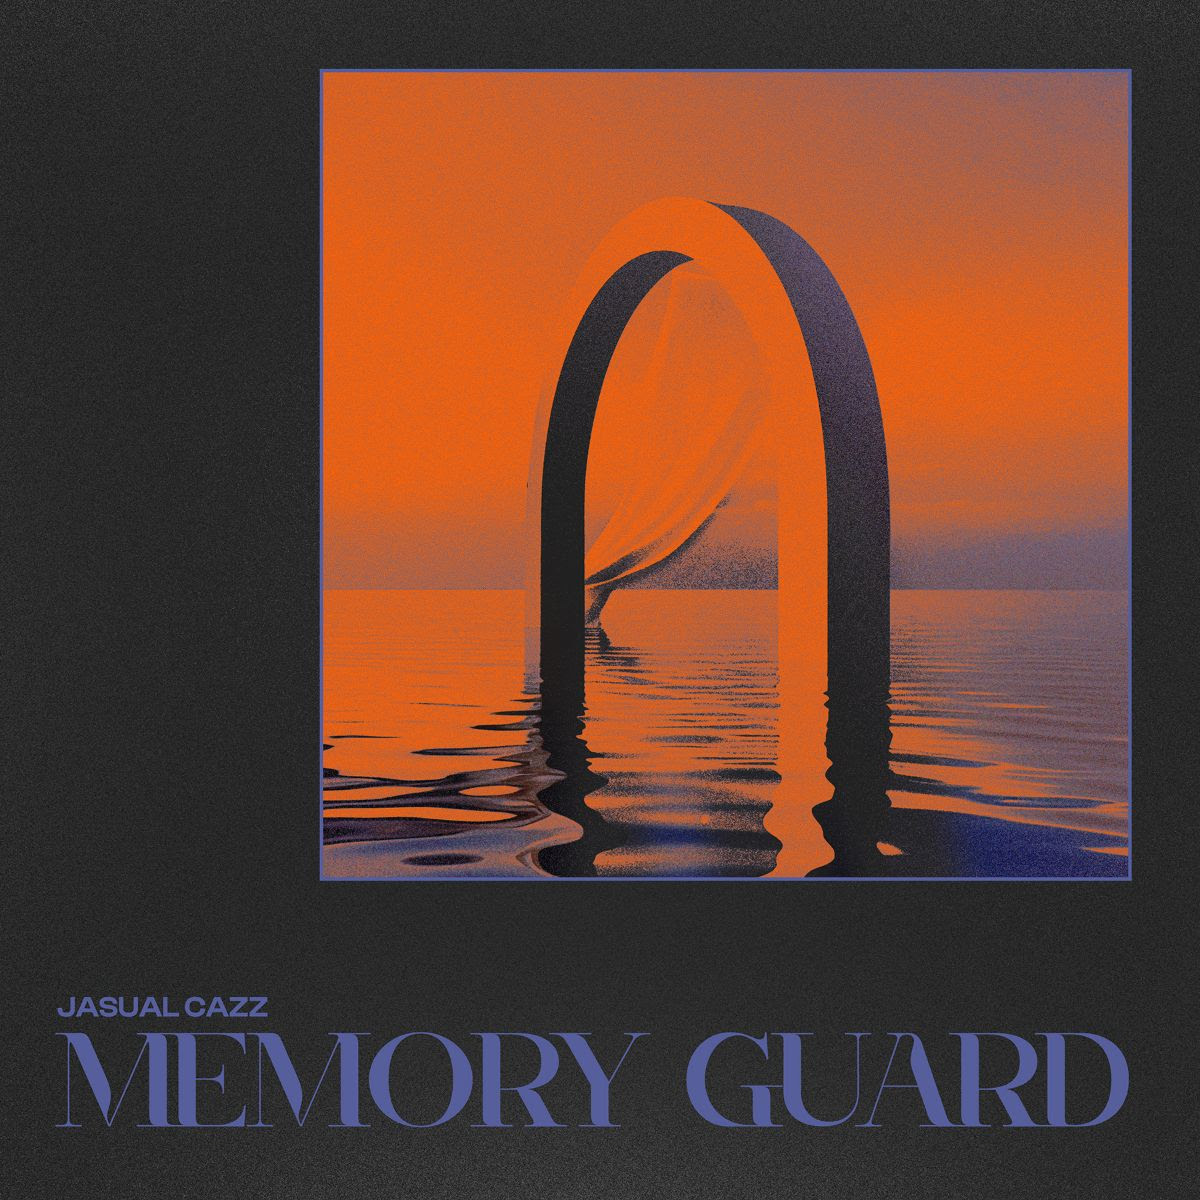 Jasual Cazz annonce son 1er album tant attendu : Memory Guard